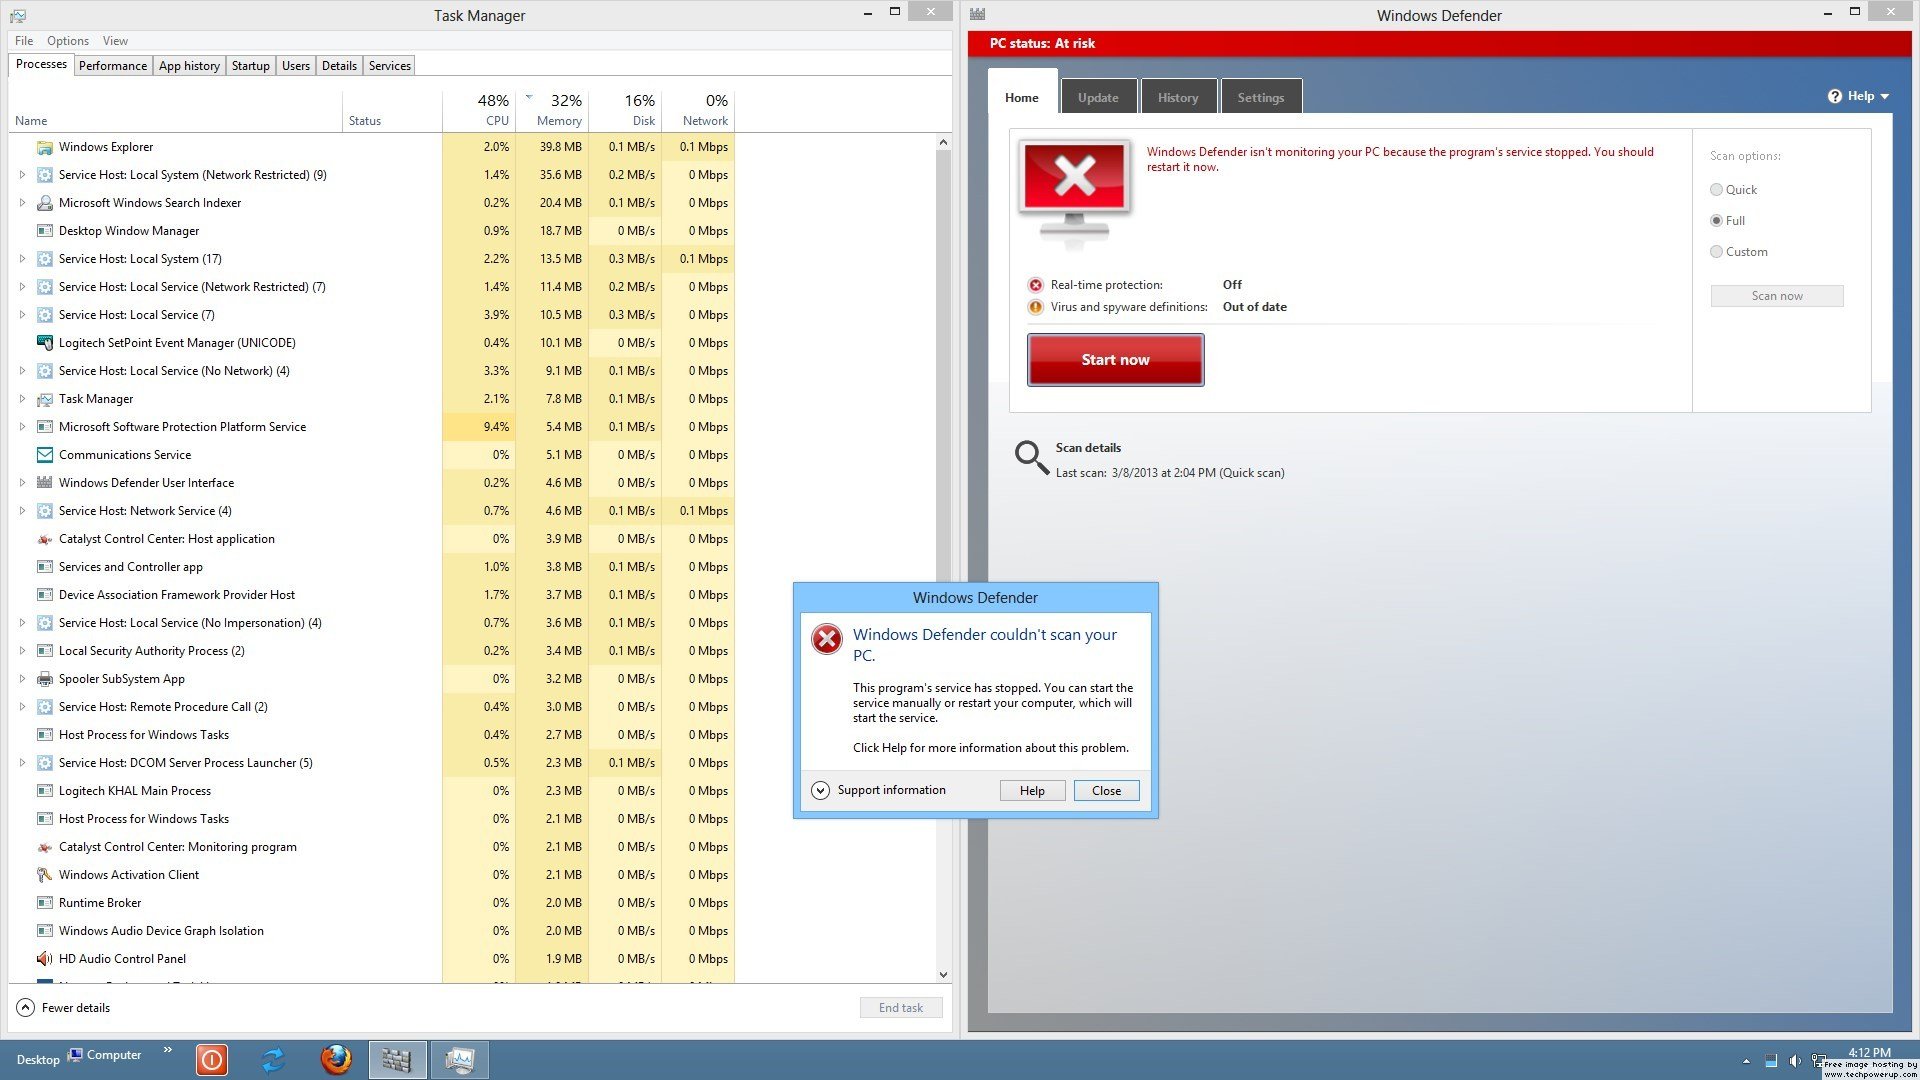 Windows Defender crashes when i click ''Run a new advanced scan'' Capture1155599.jpg